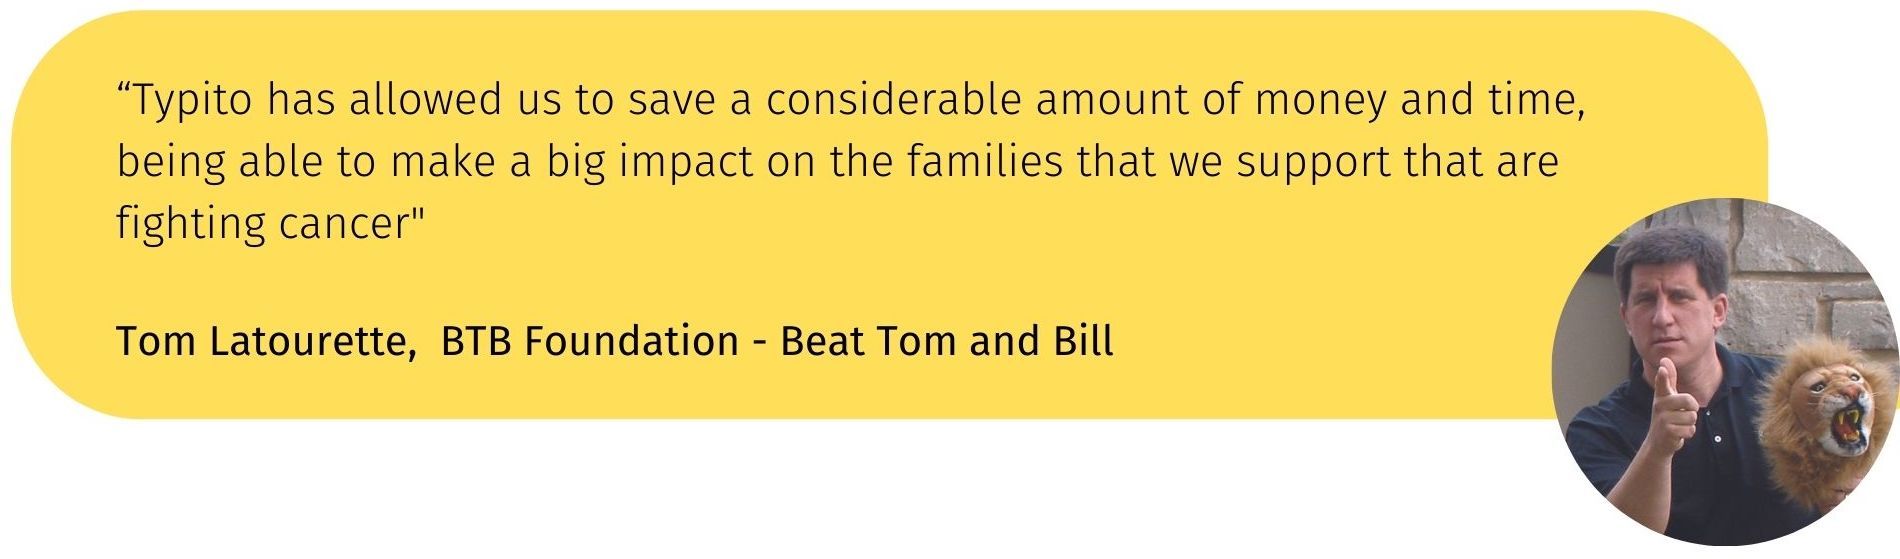 Tom Latourette, BTB Foundation - Beat Tom and Bill